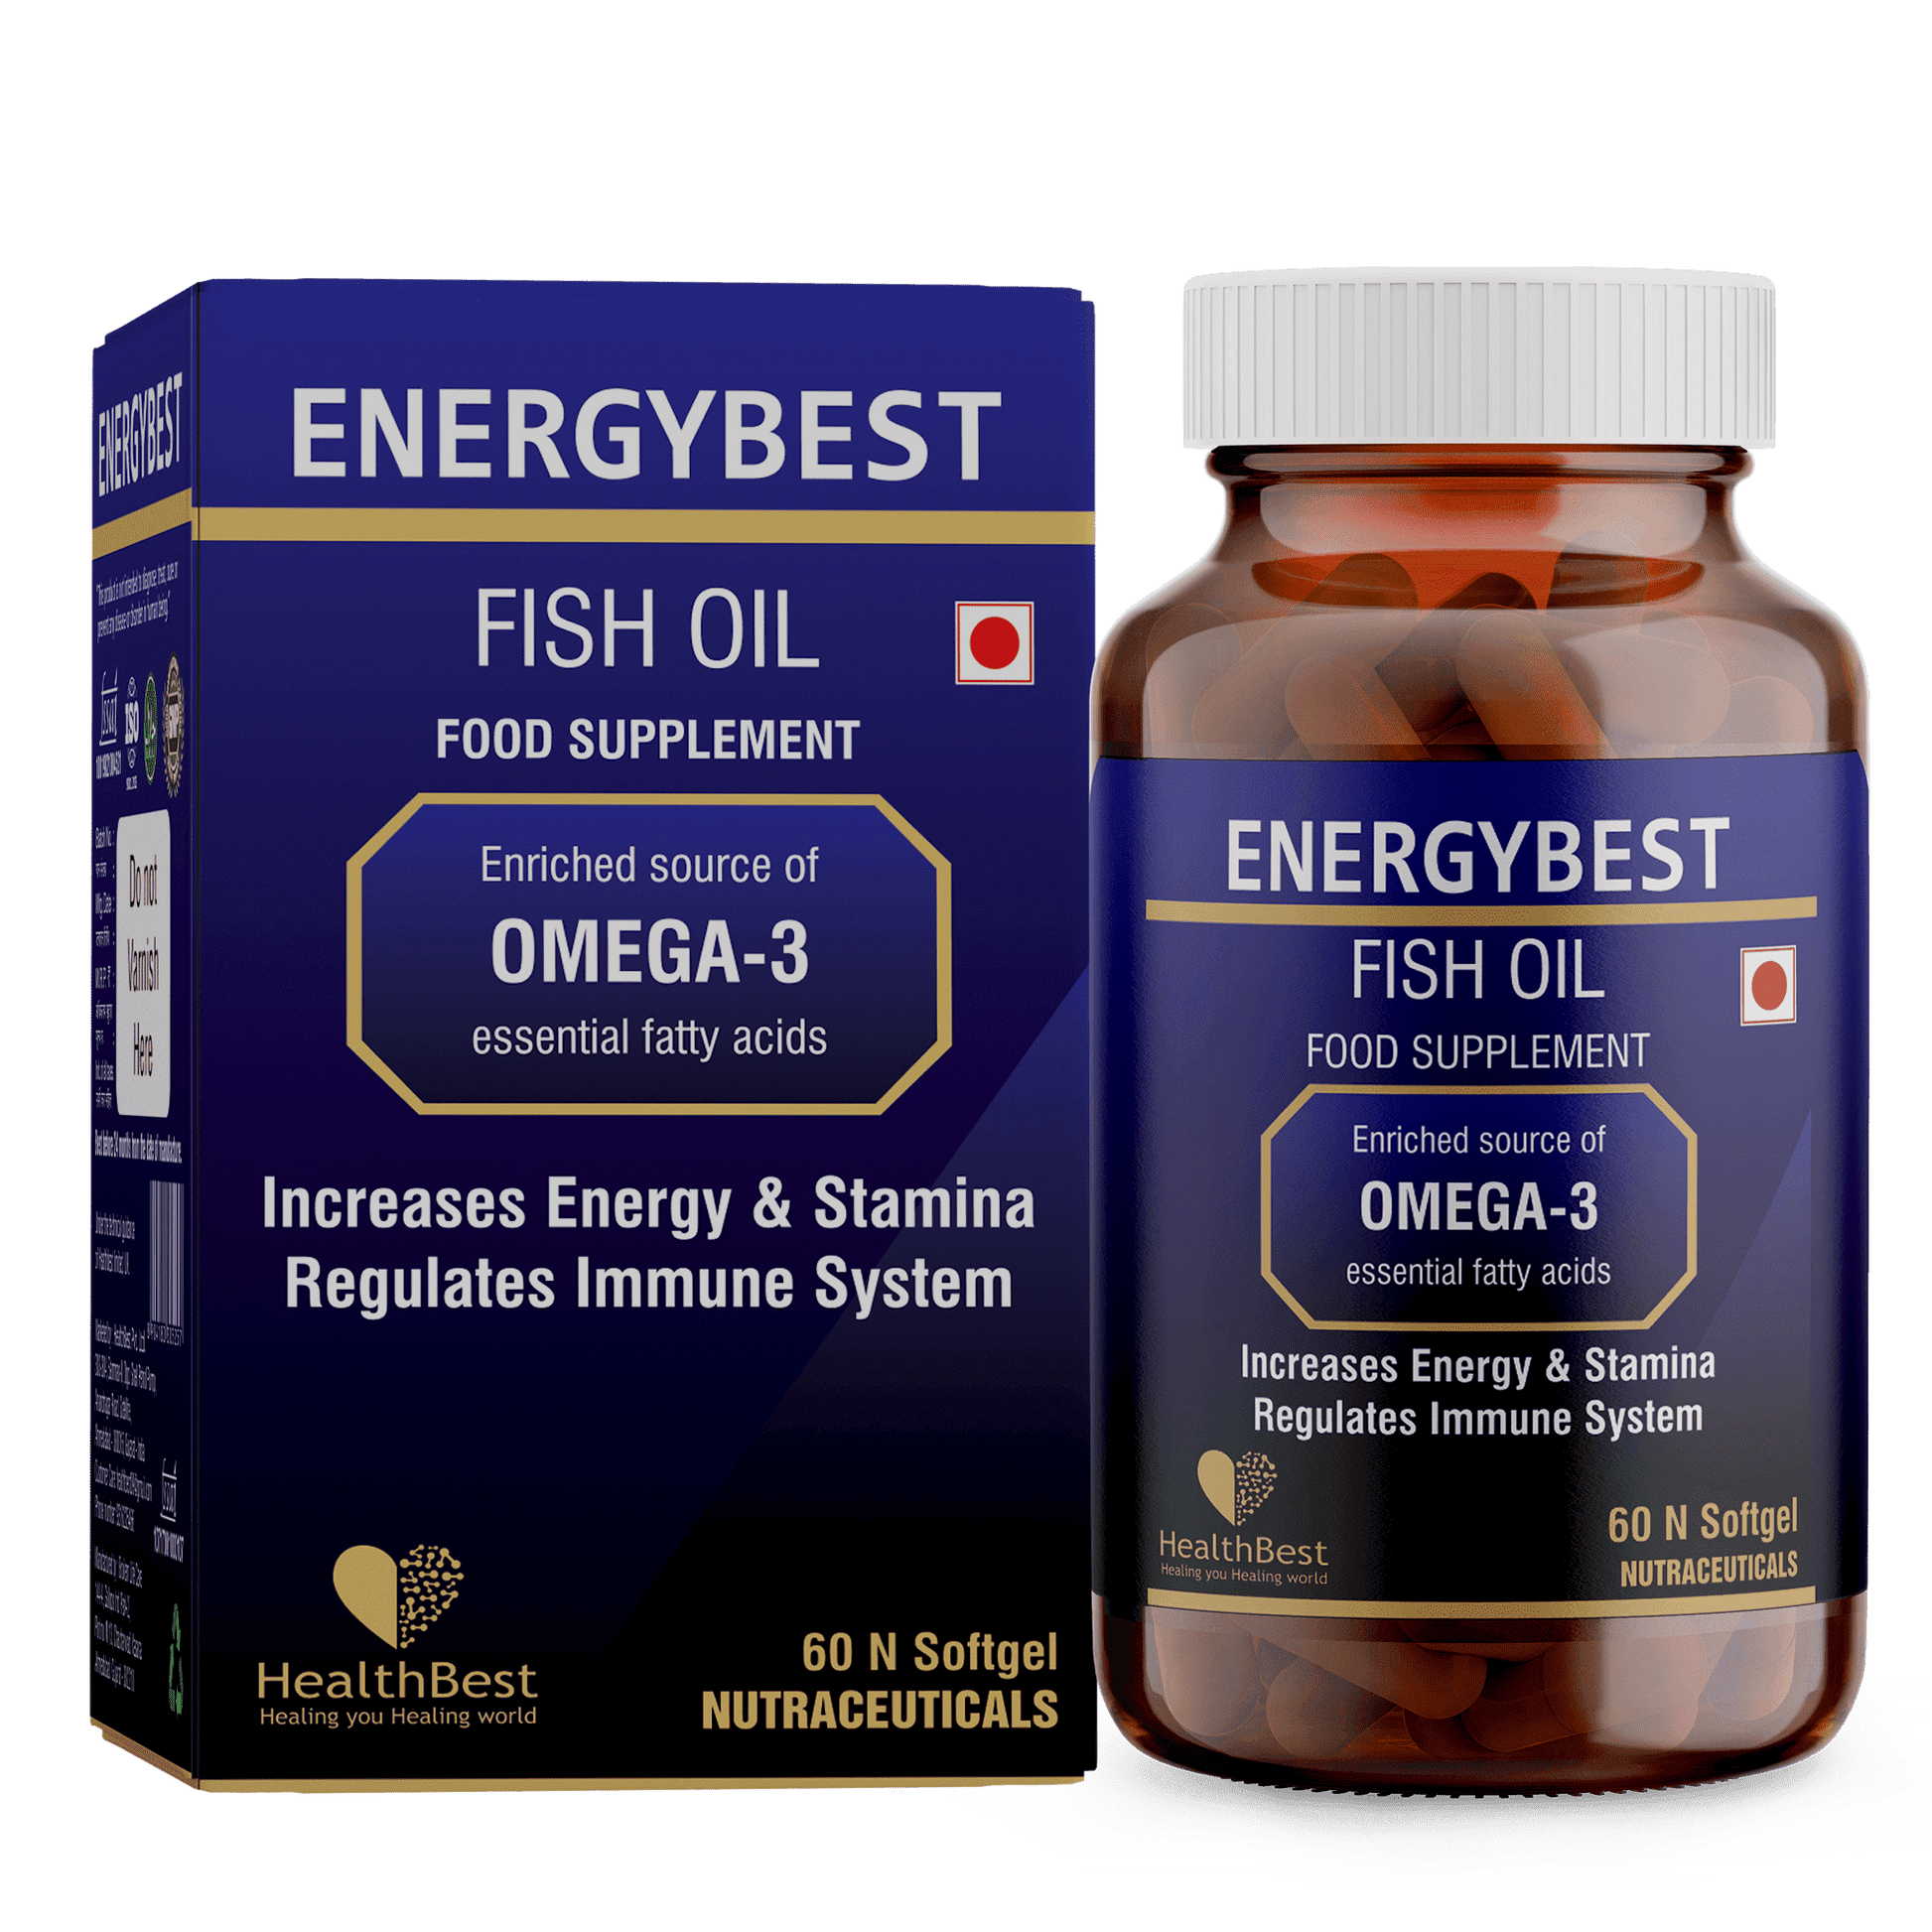 EnergyBest Fish Oil Food Supplement